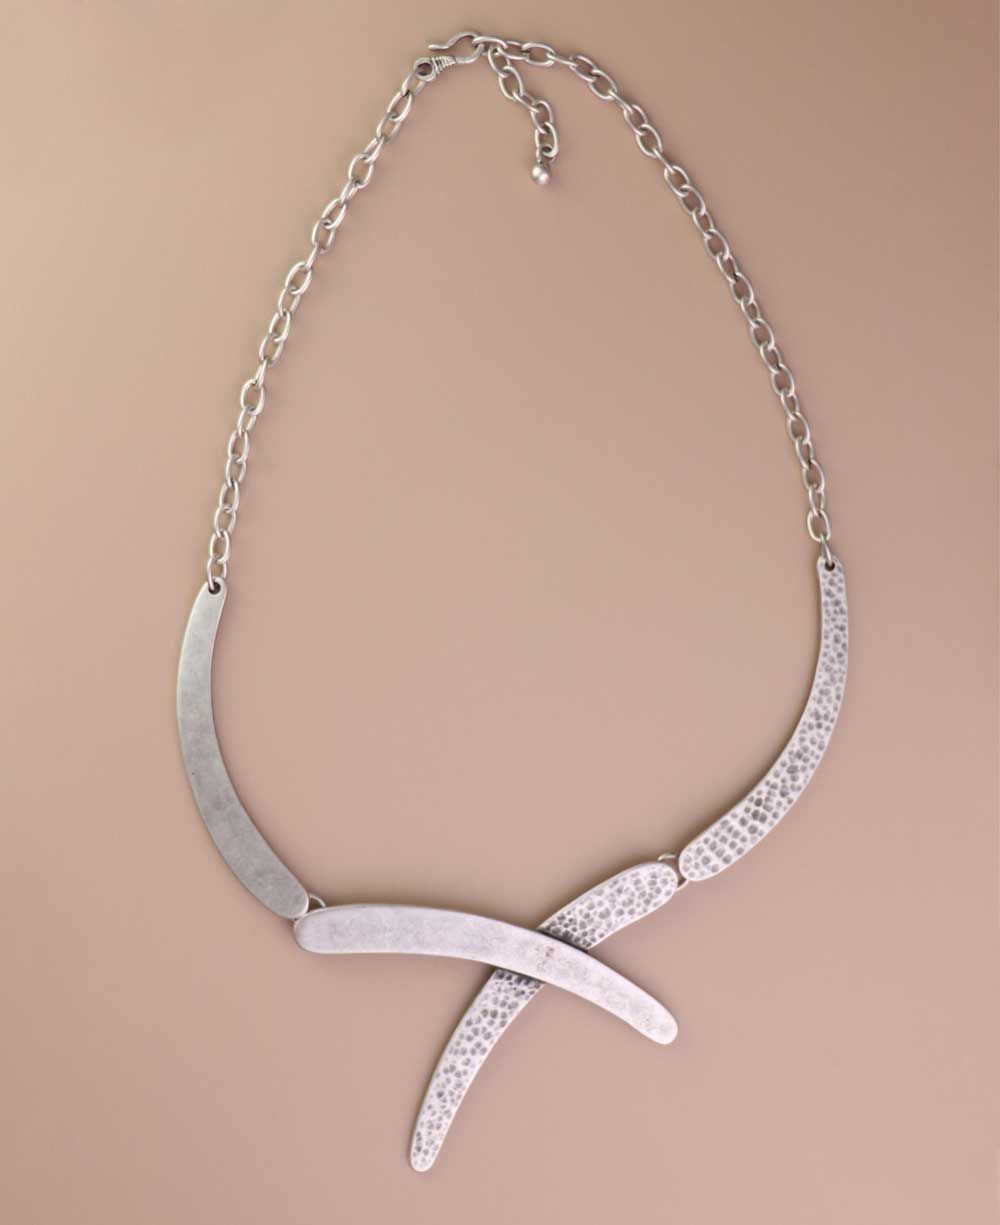 Artistic geometric statement necklace